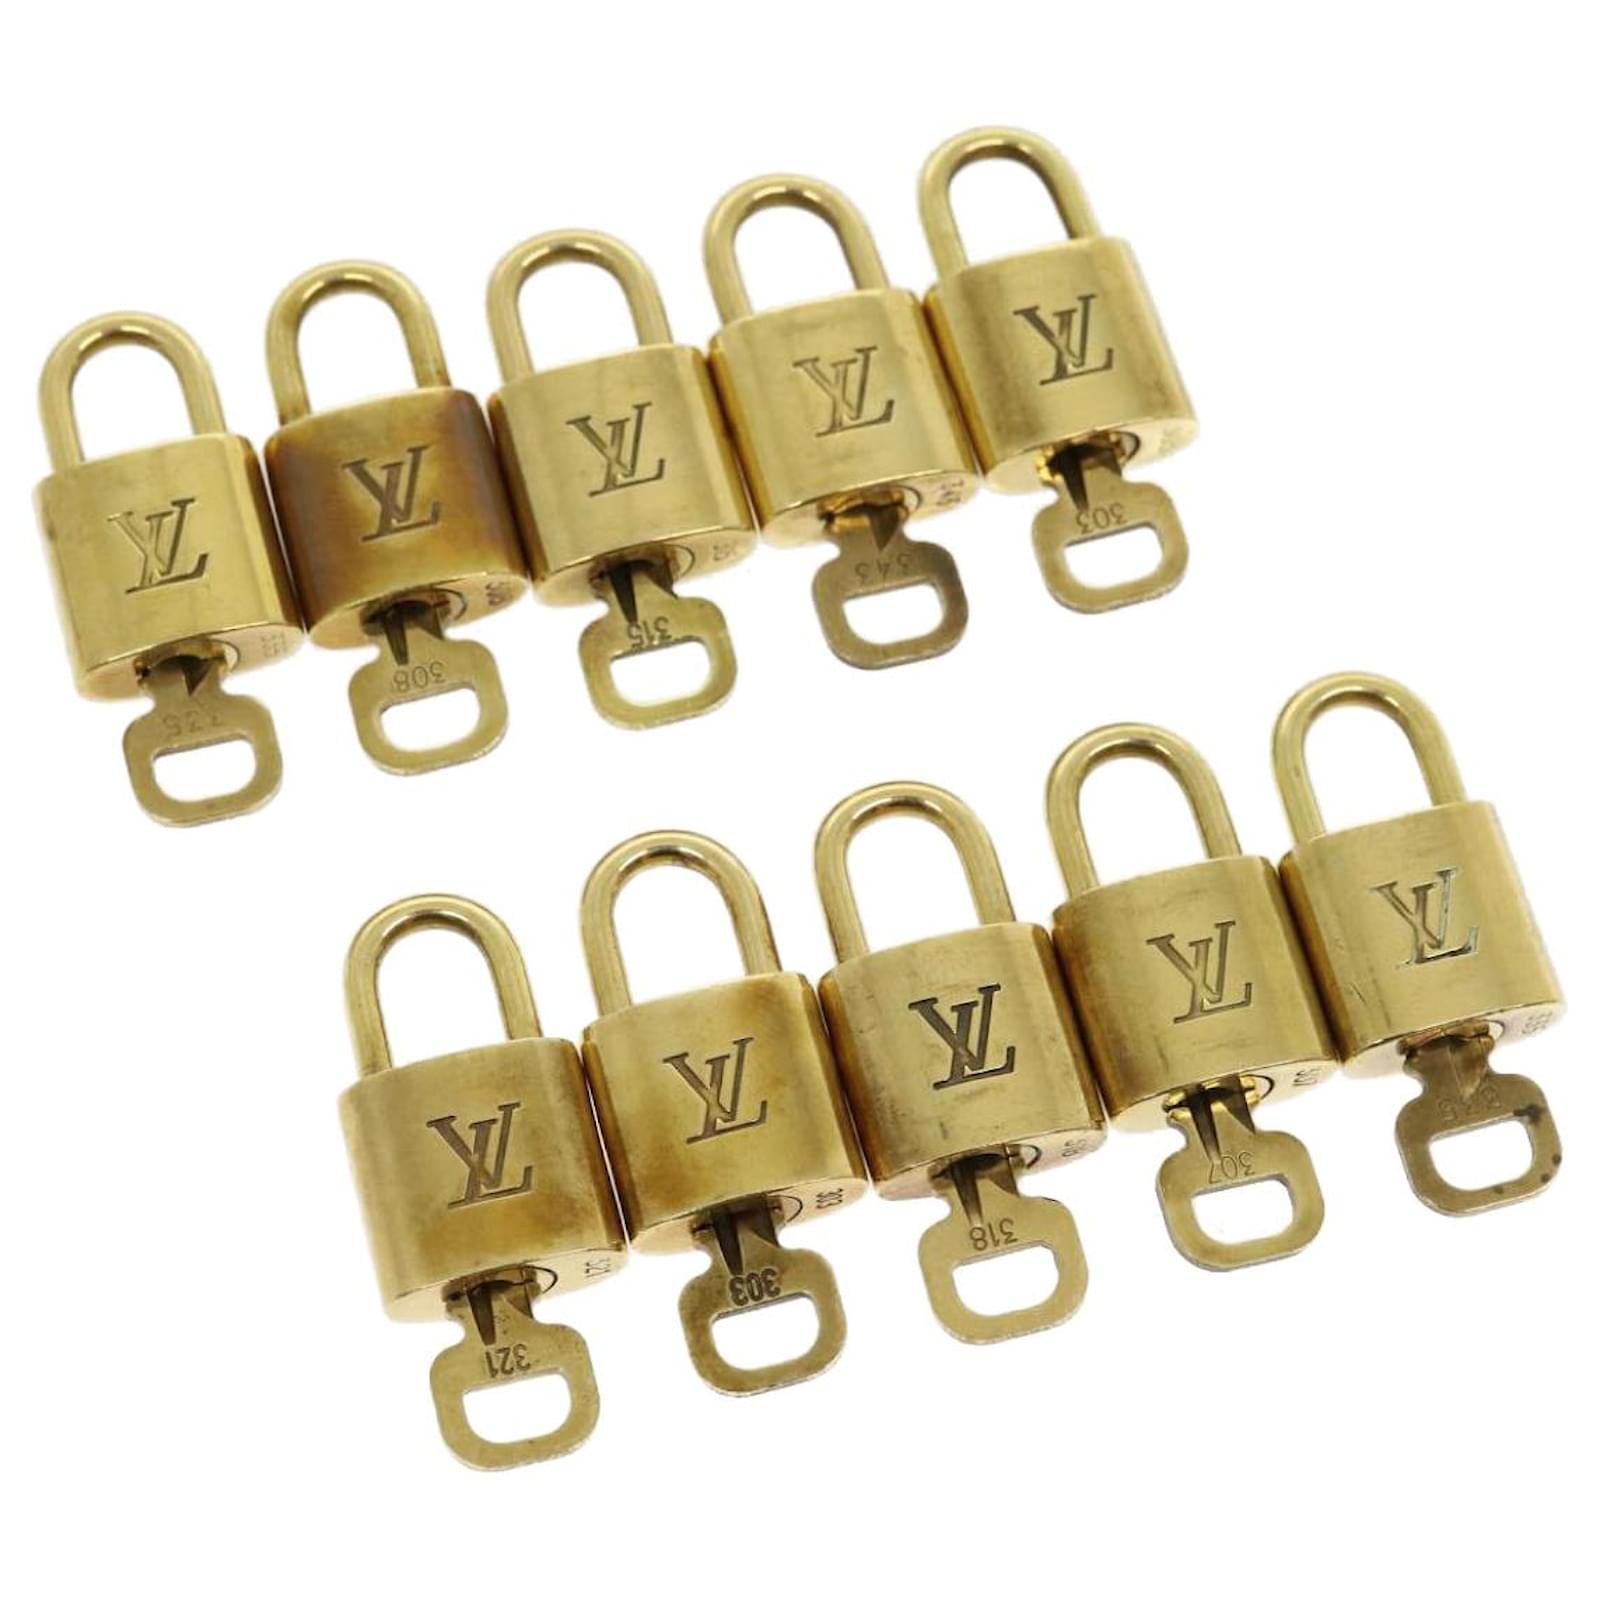 Louis Vuitton, Accessories, Louis Vuitton Lv Lock Keys And Mini Dust Bag